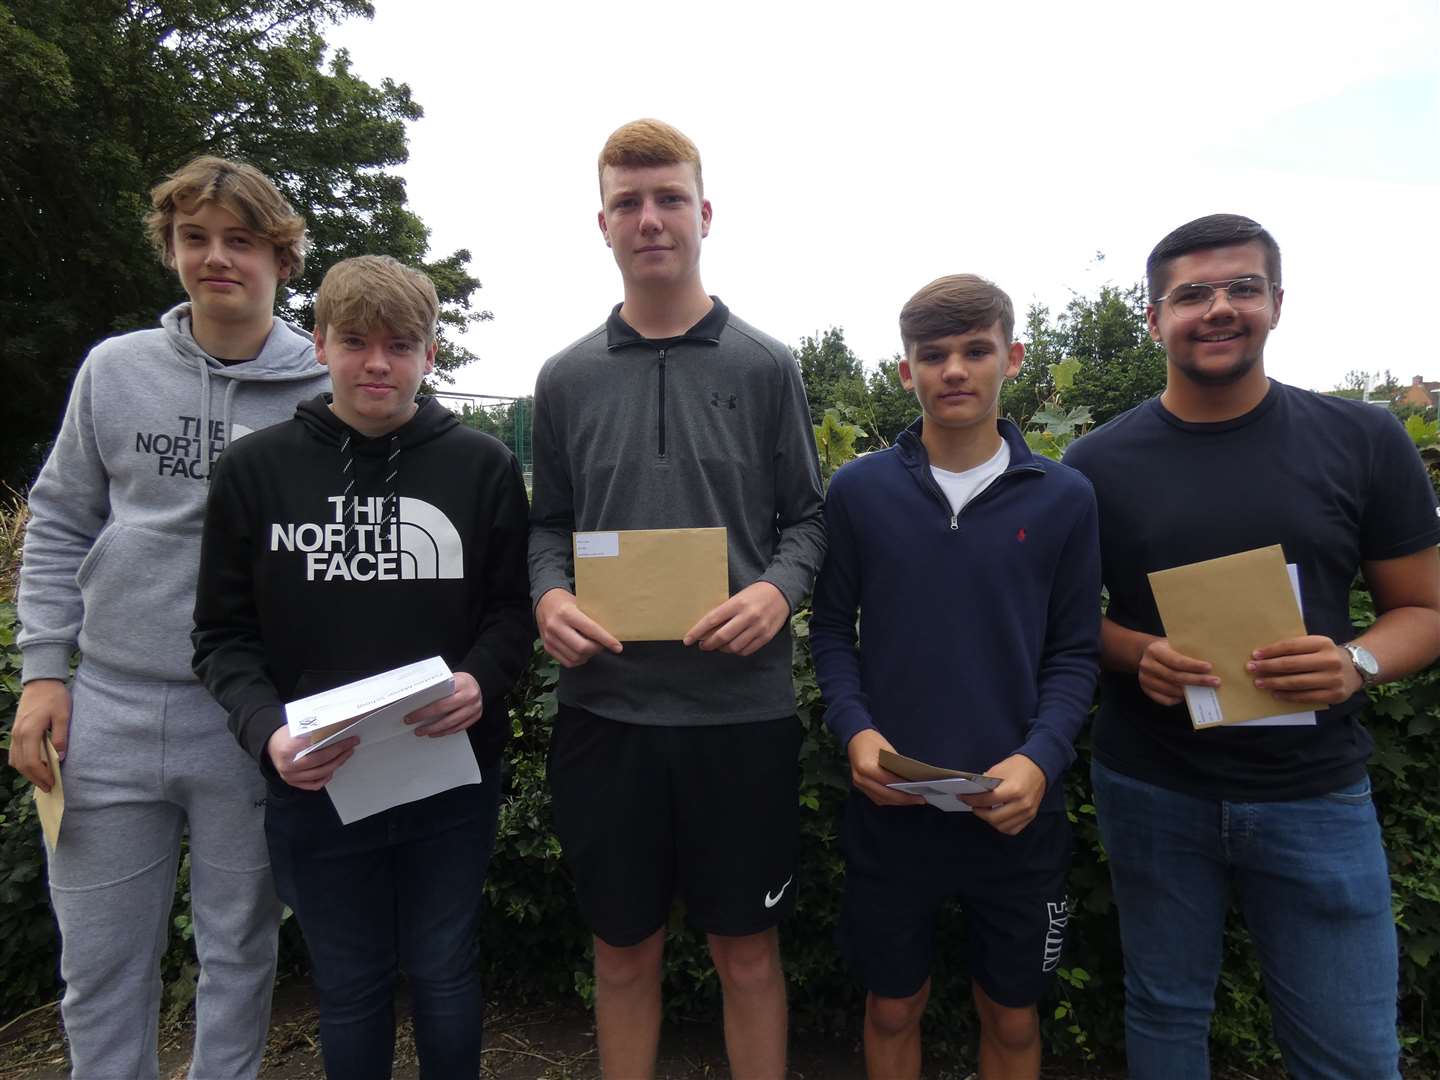 Harley Friar, Jake Humphrey, Jack Mills, Billy Horley and Rhys Medwyn collecting their GCSE results at Fulston Manor School, Sittingbourne